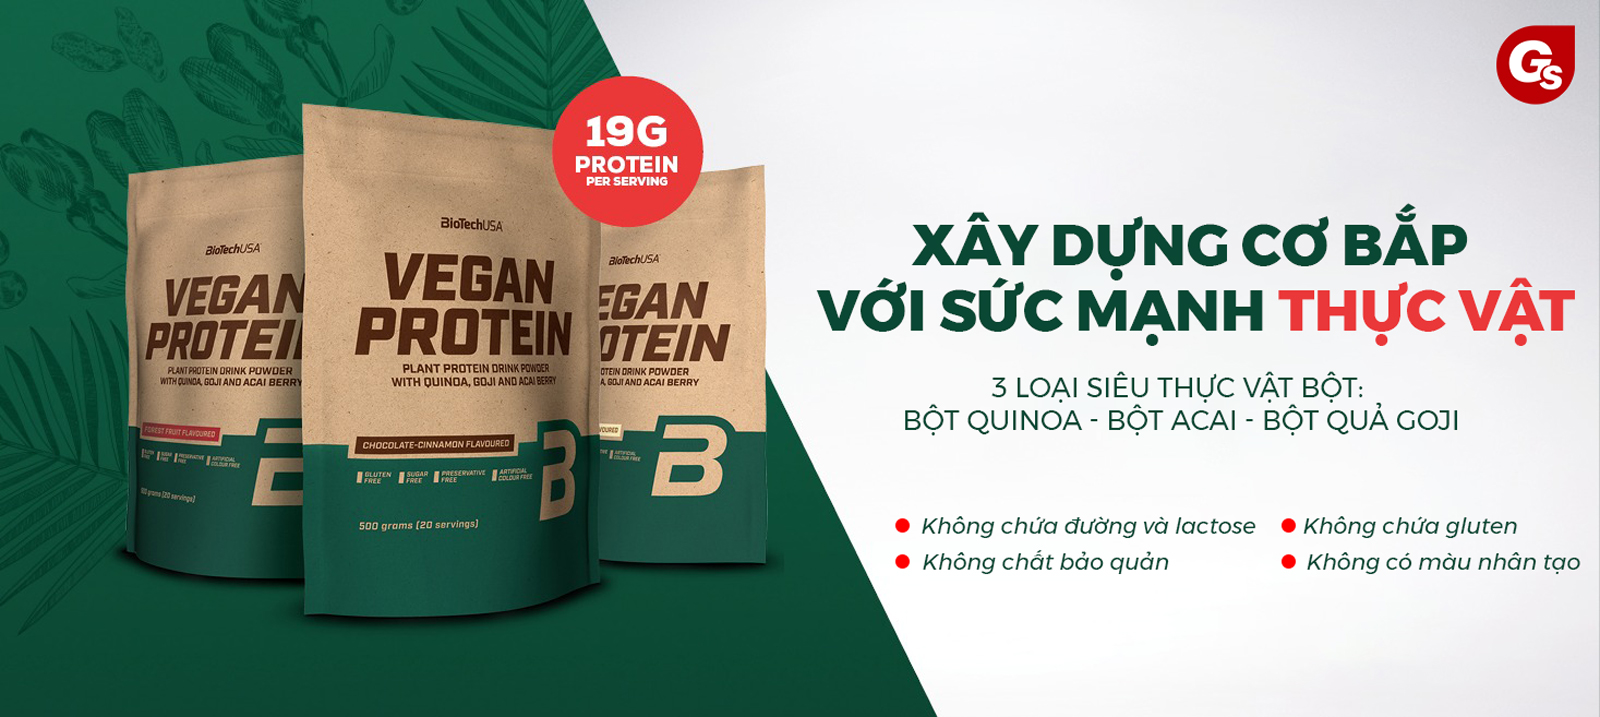 Biotech-USA-Vegan-Protein-thuc-vat-xay-dung-co-bap-gymstore-1